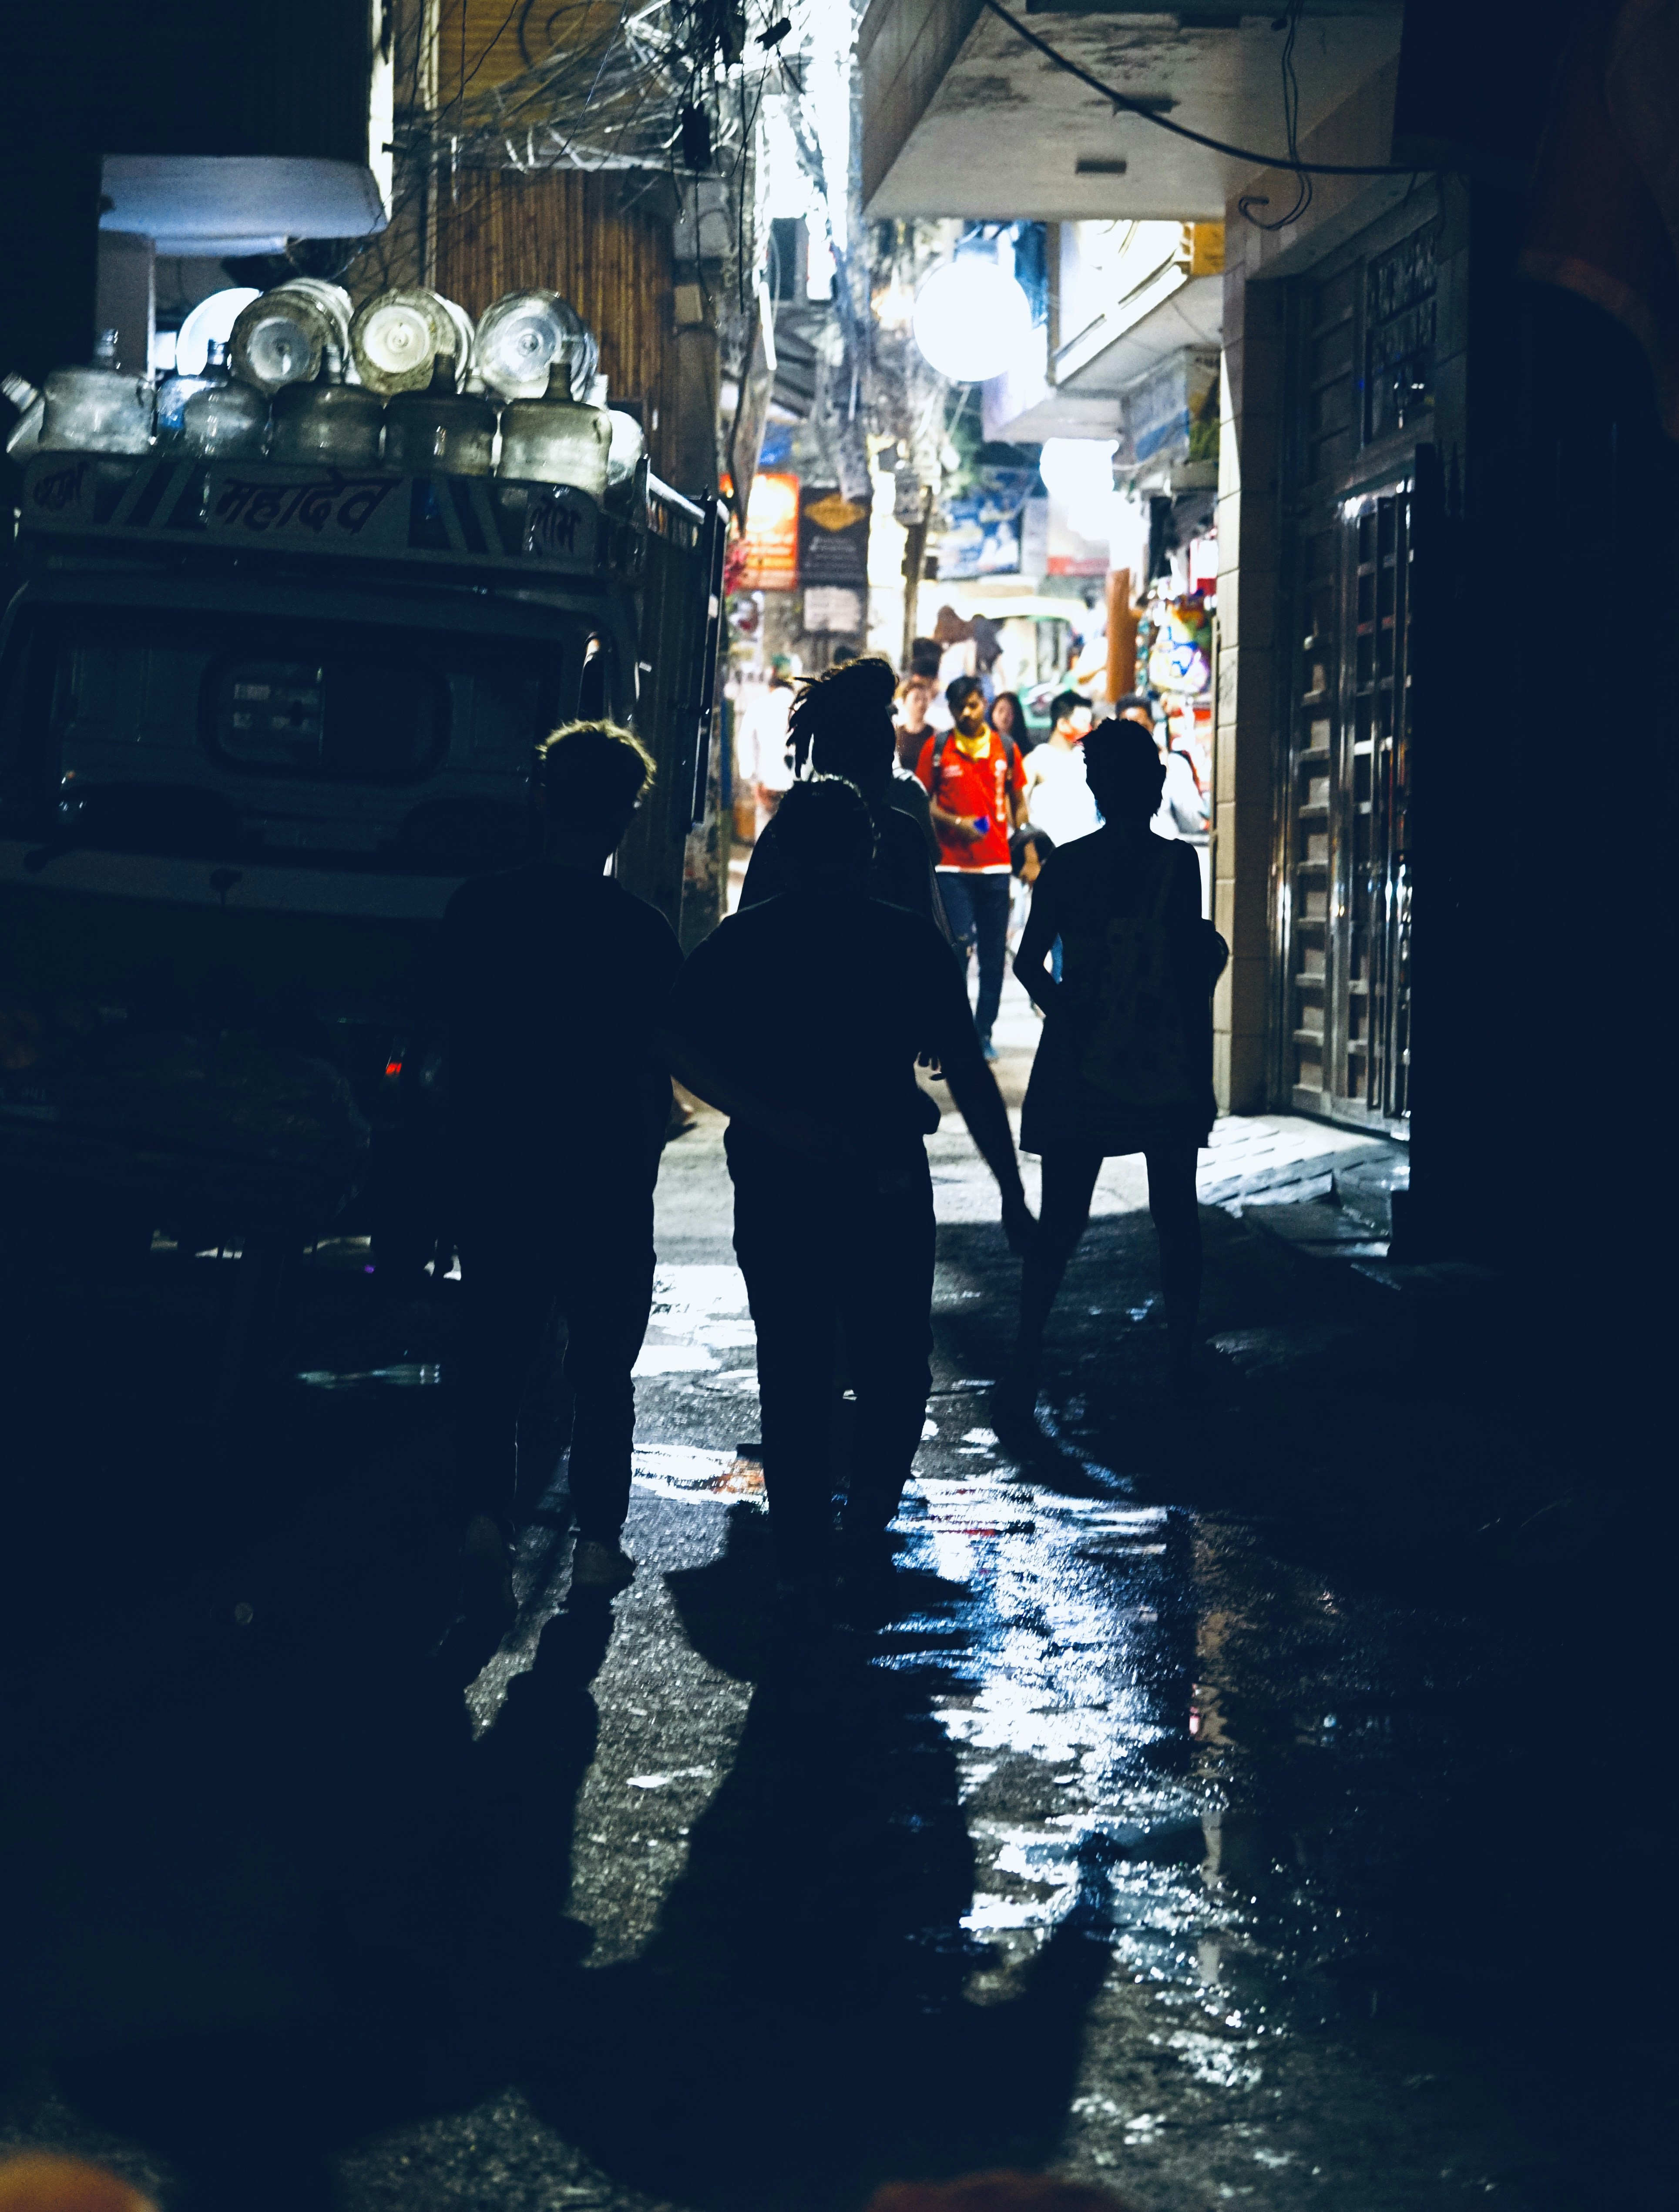 Night scene of Indian street